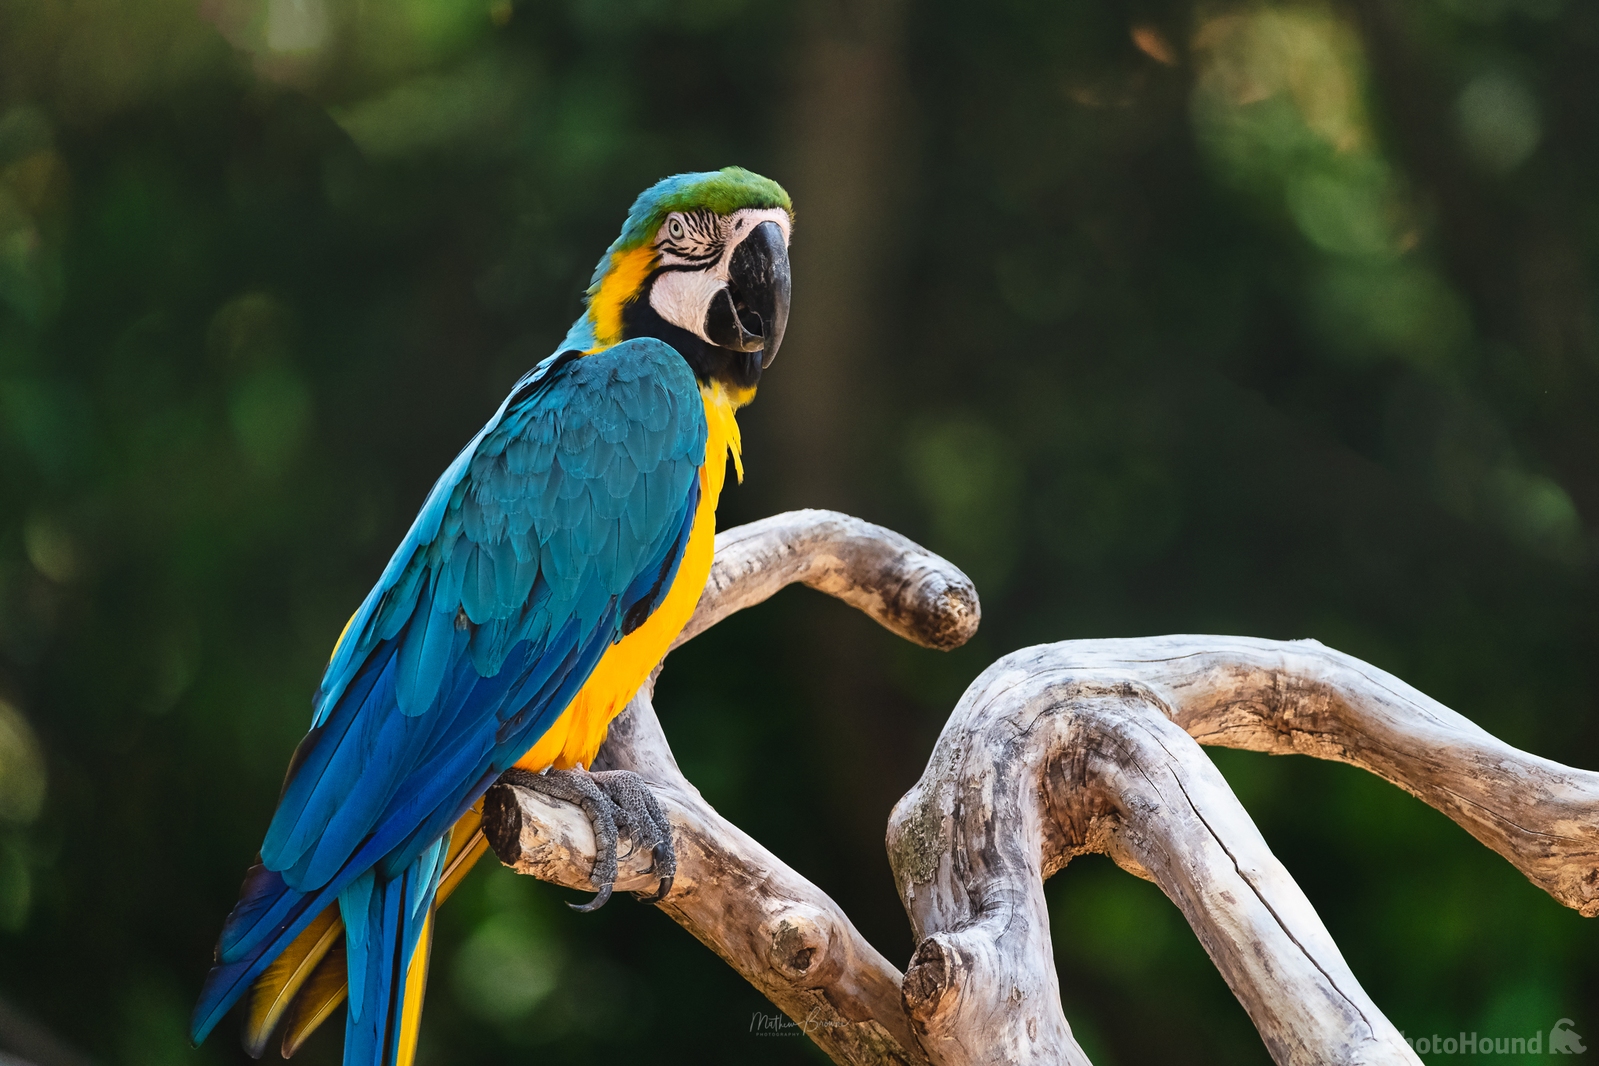 Image of Bali Bird Park by Mathew Browne